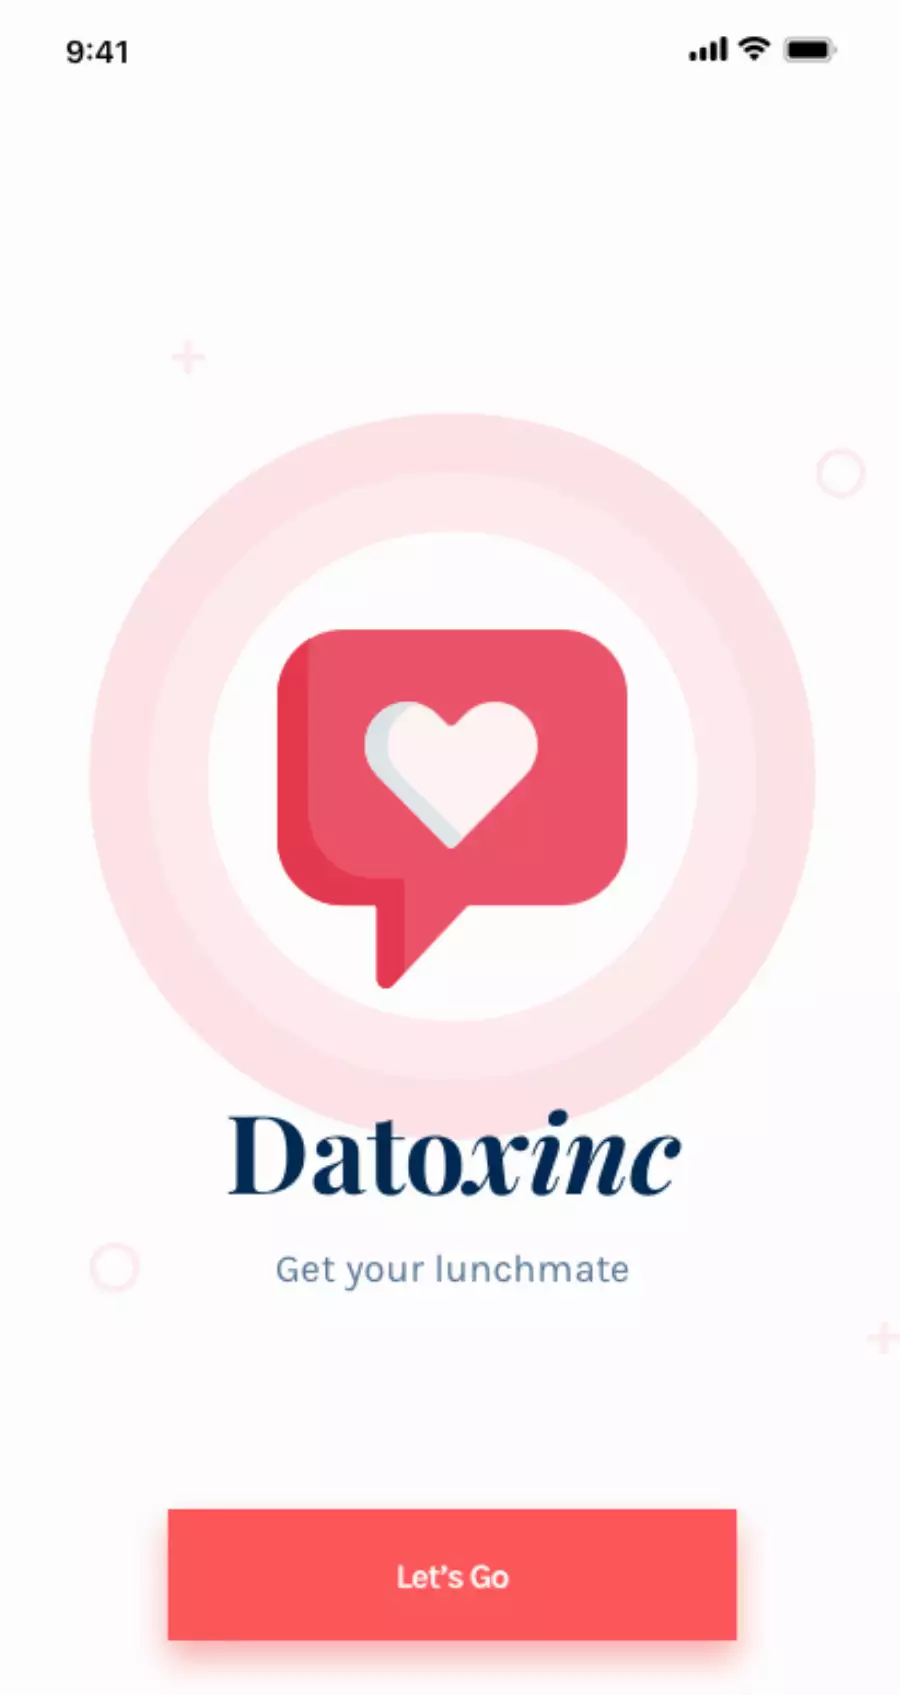 Datoxinc - dating app template 